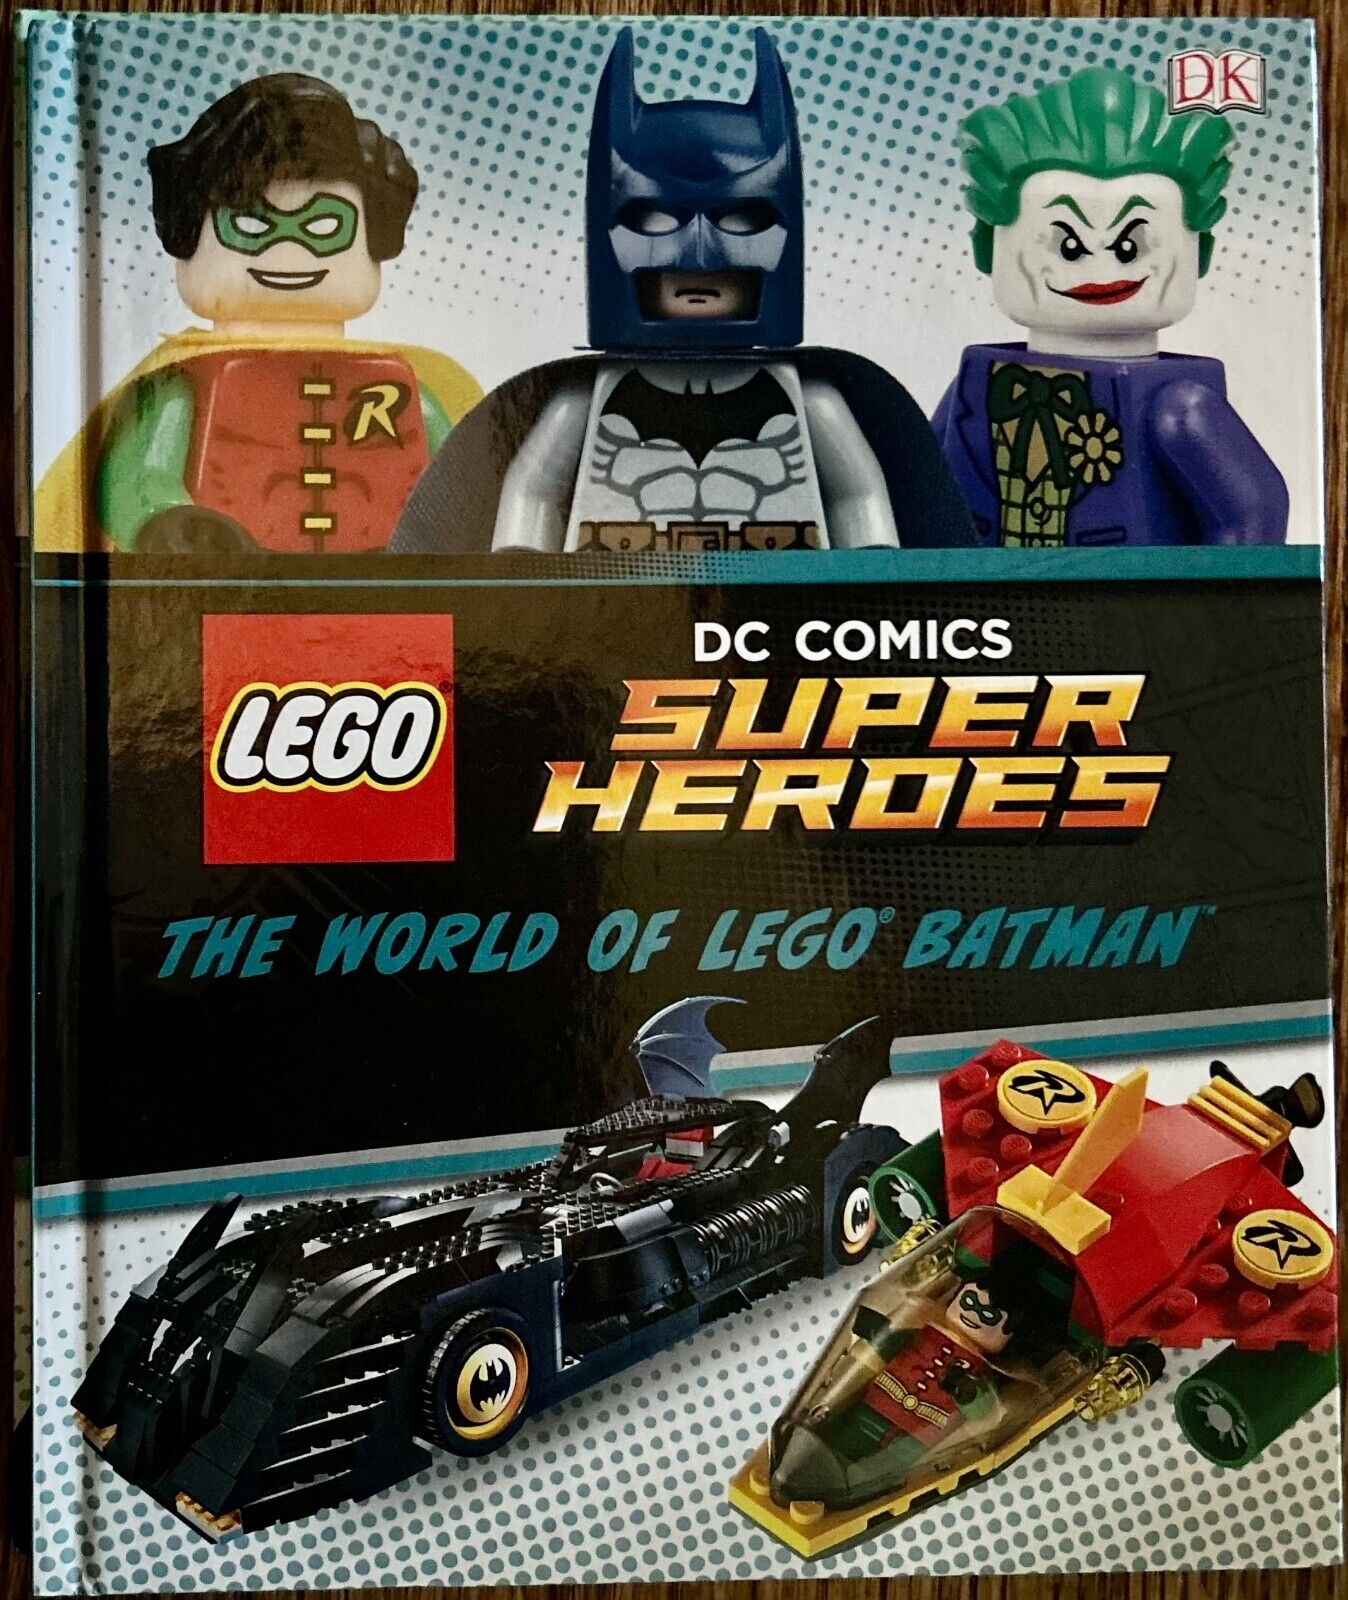 Lego DC Comics Super Heroes: The World of Lego Batman by Daniel Lipkowitz